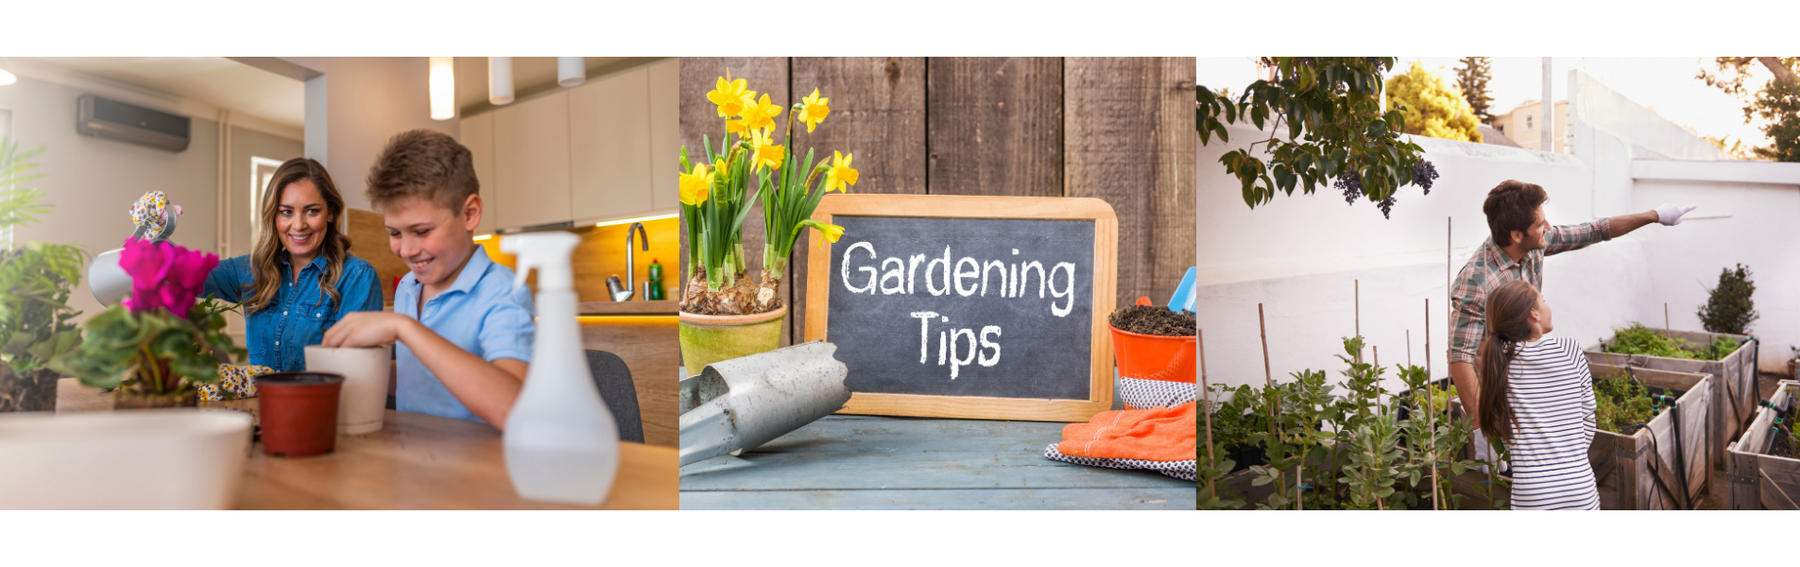 20 Amazing Gardening Tips and Tricks - CGASPL